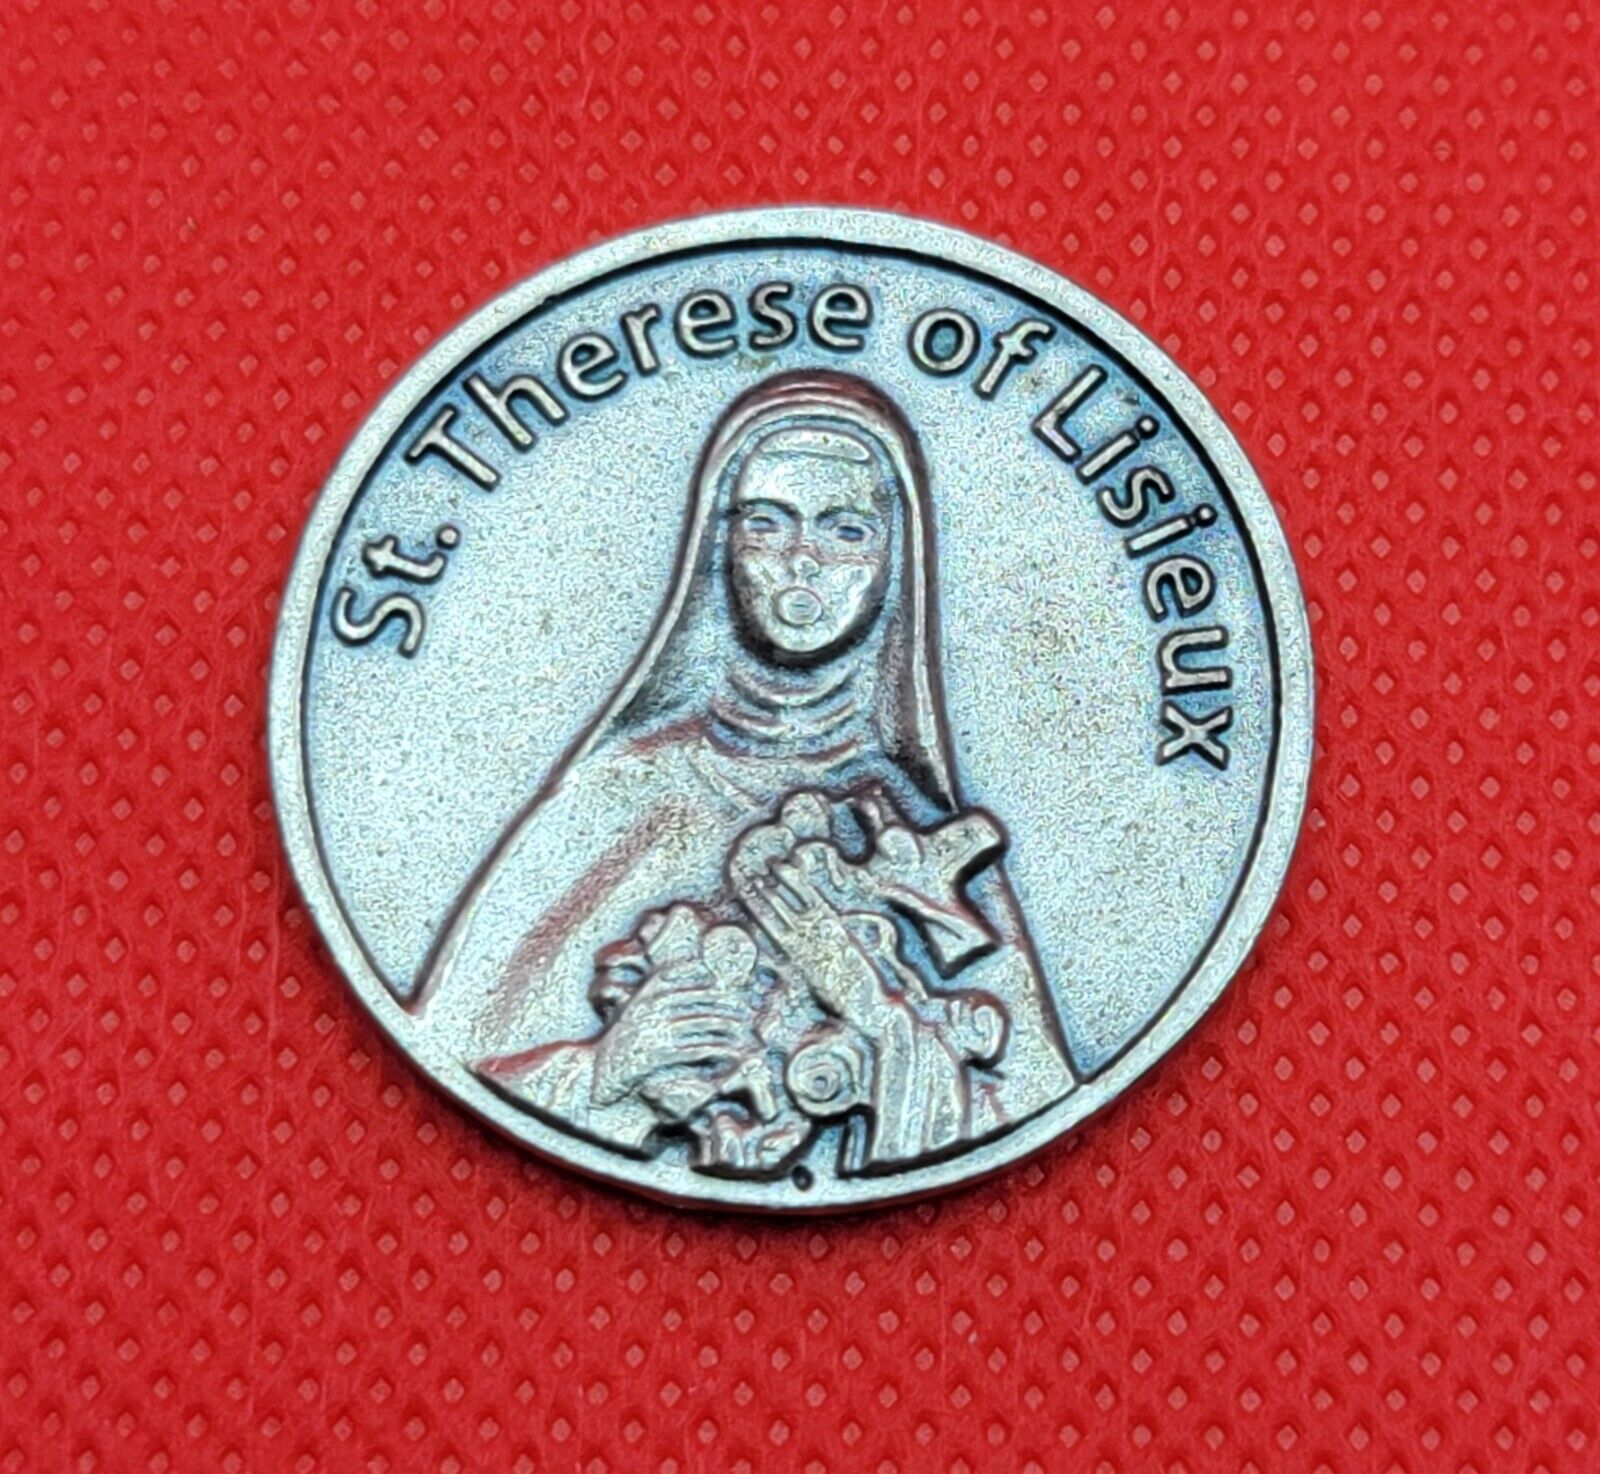 Vintage St. Thereseof Lisieux Catholic Miraculous Medal Pedant